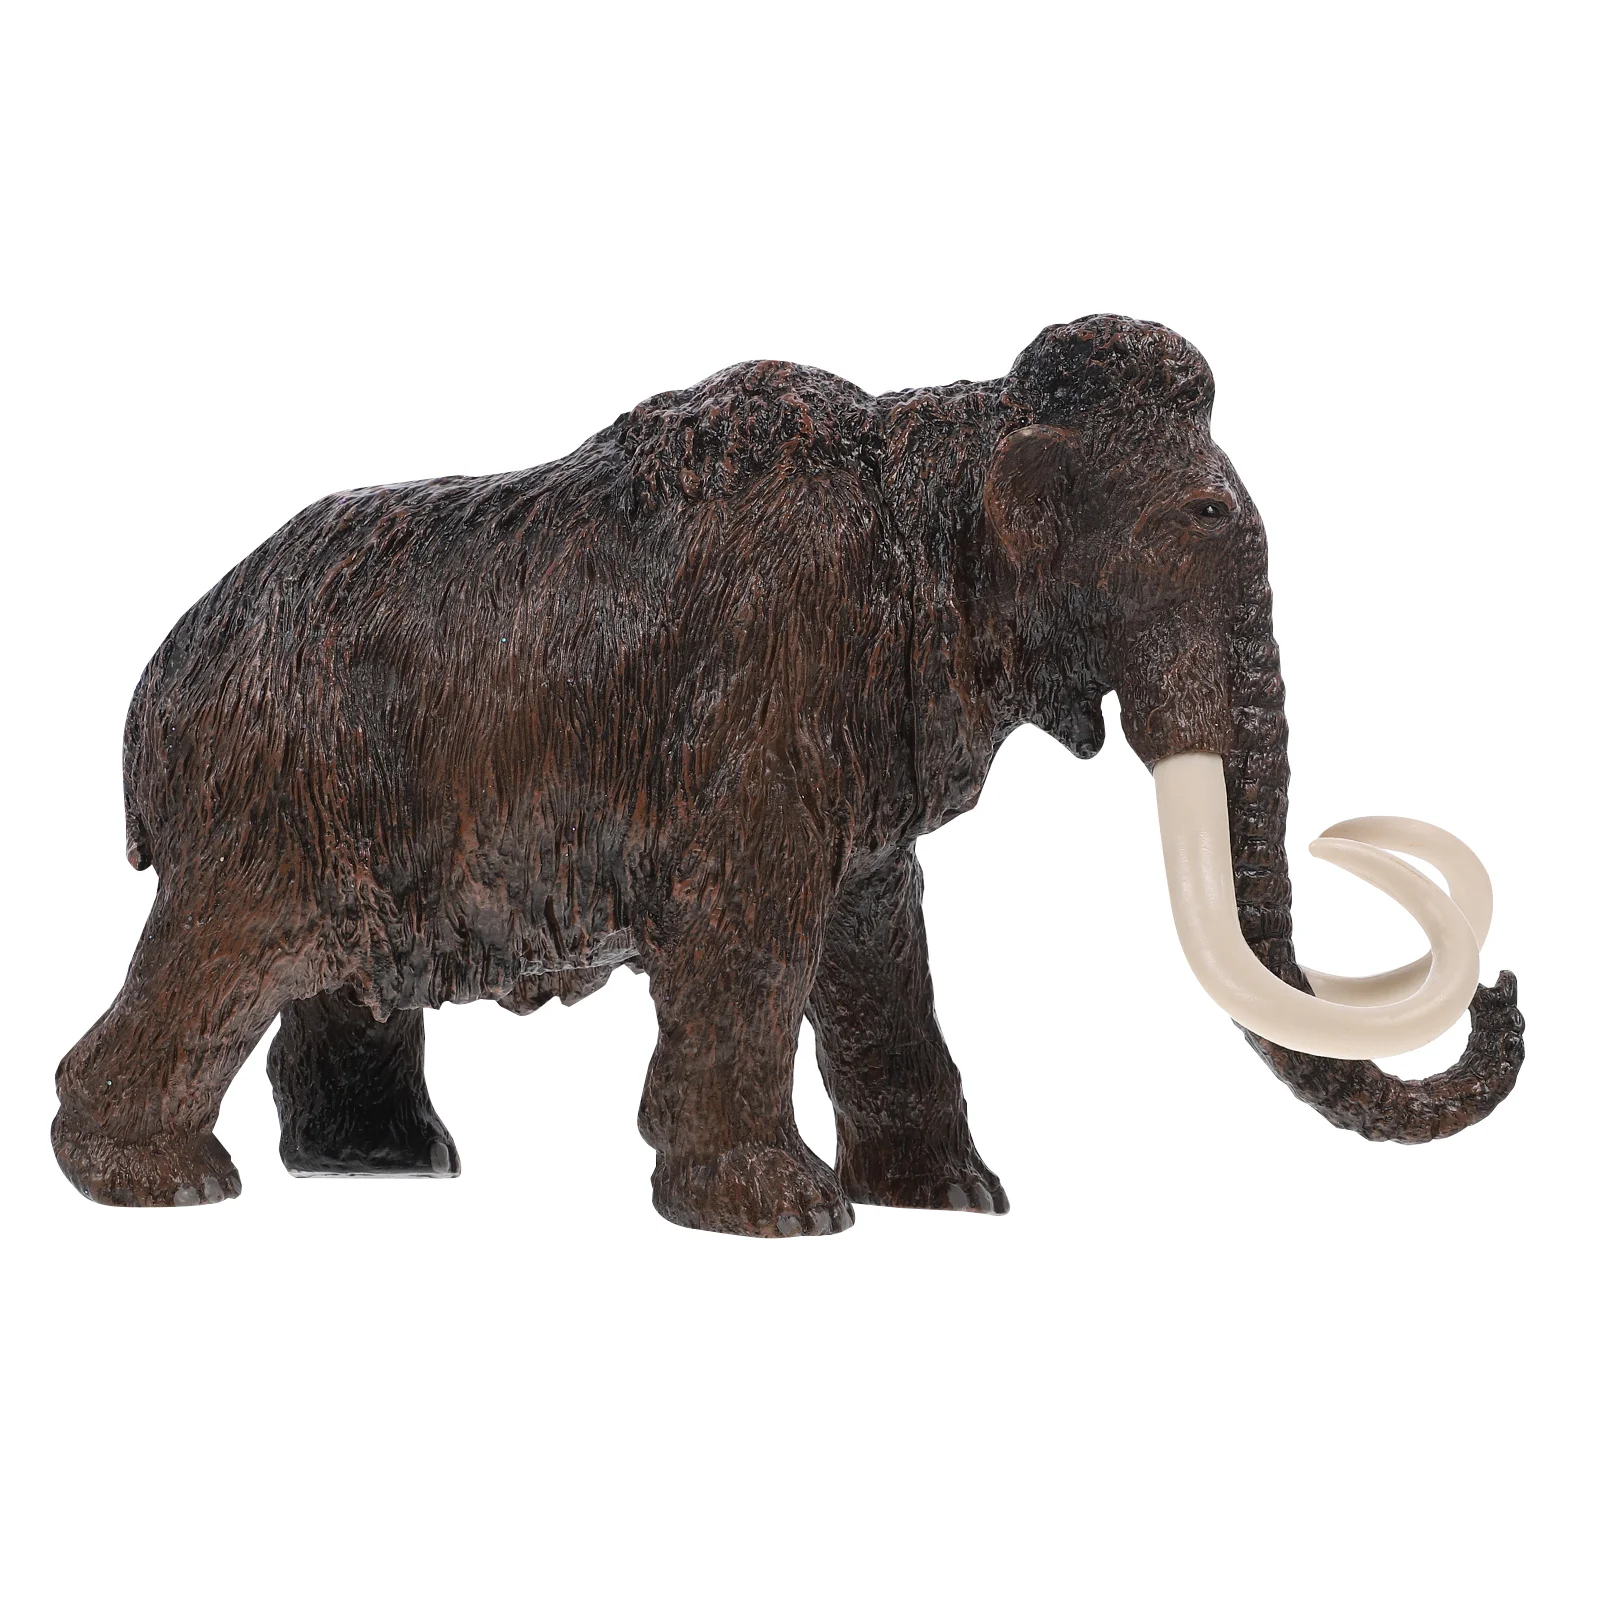 

Mammoth Realistic Prehistoric Extinct Figurine Forest Wildlife Elephant Ornament Model